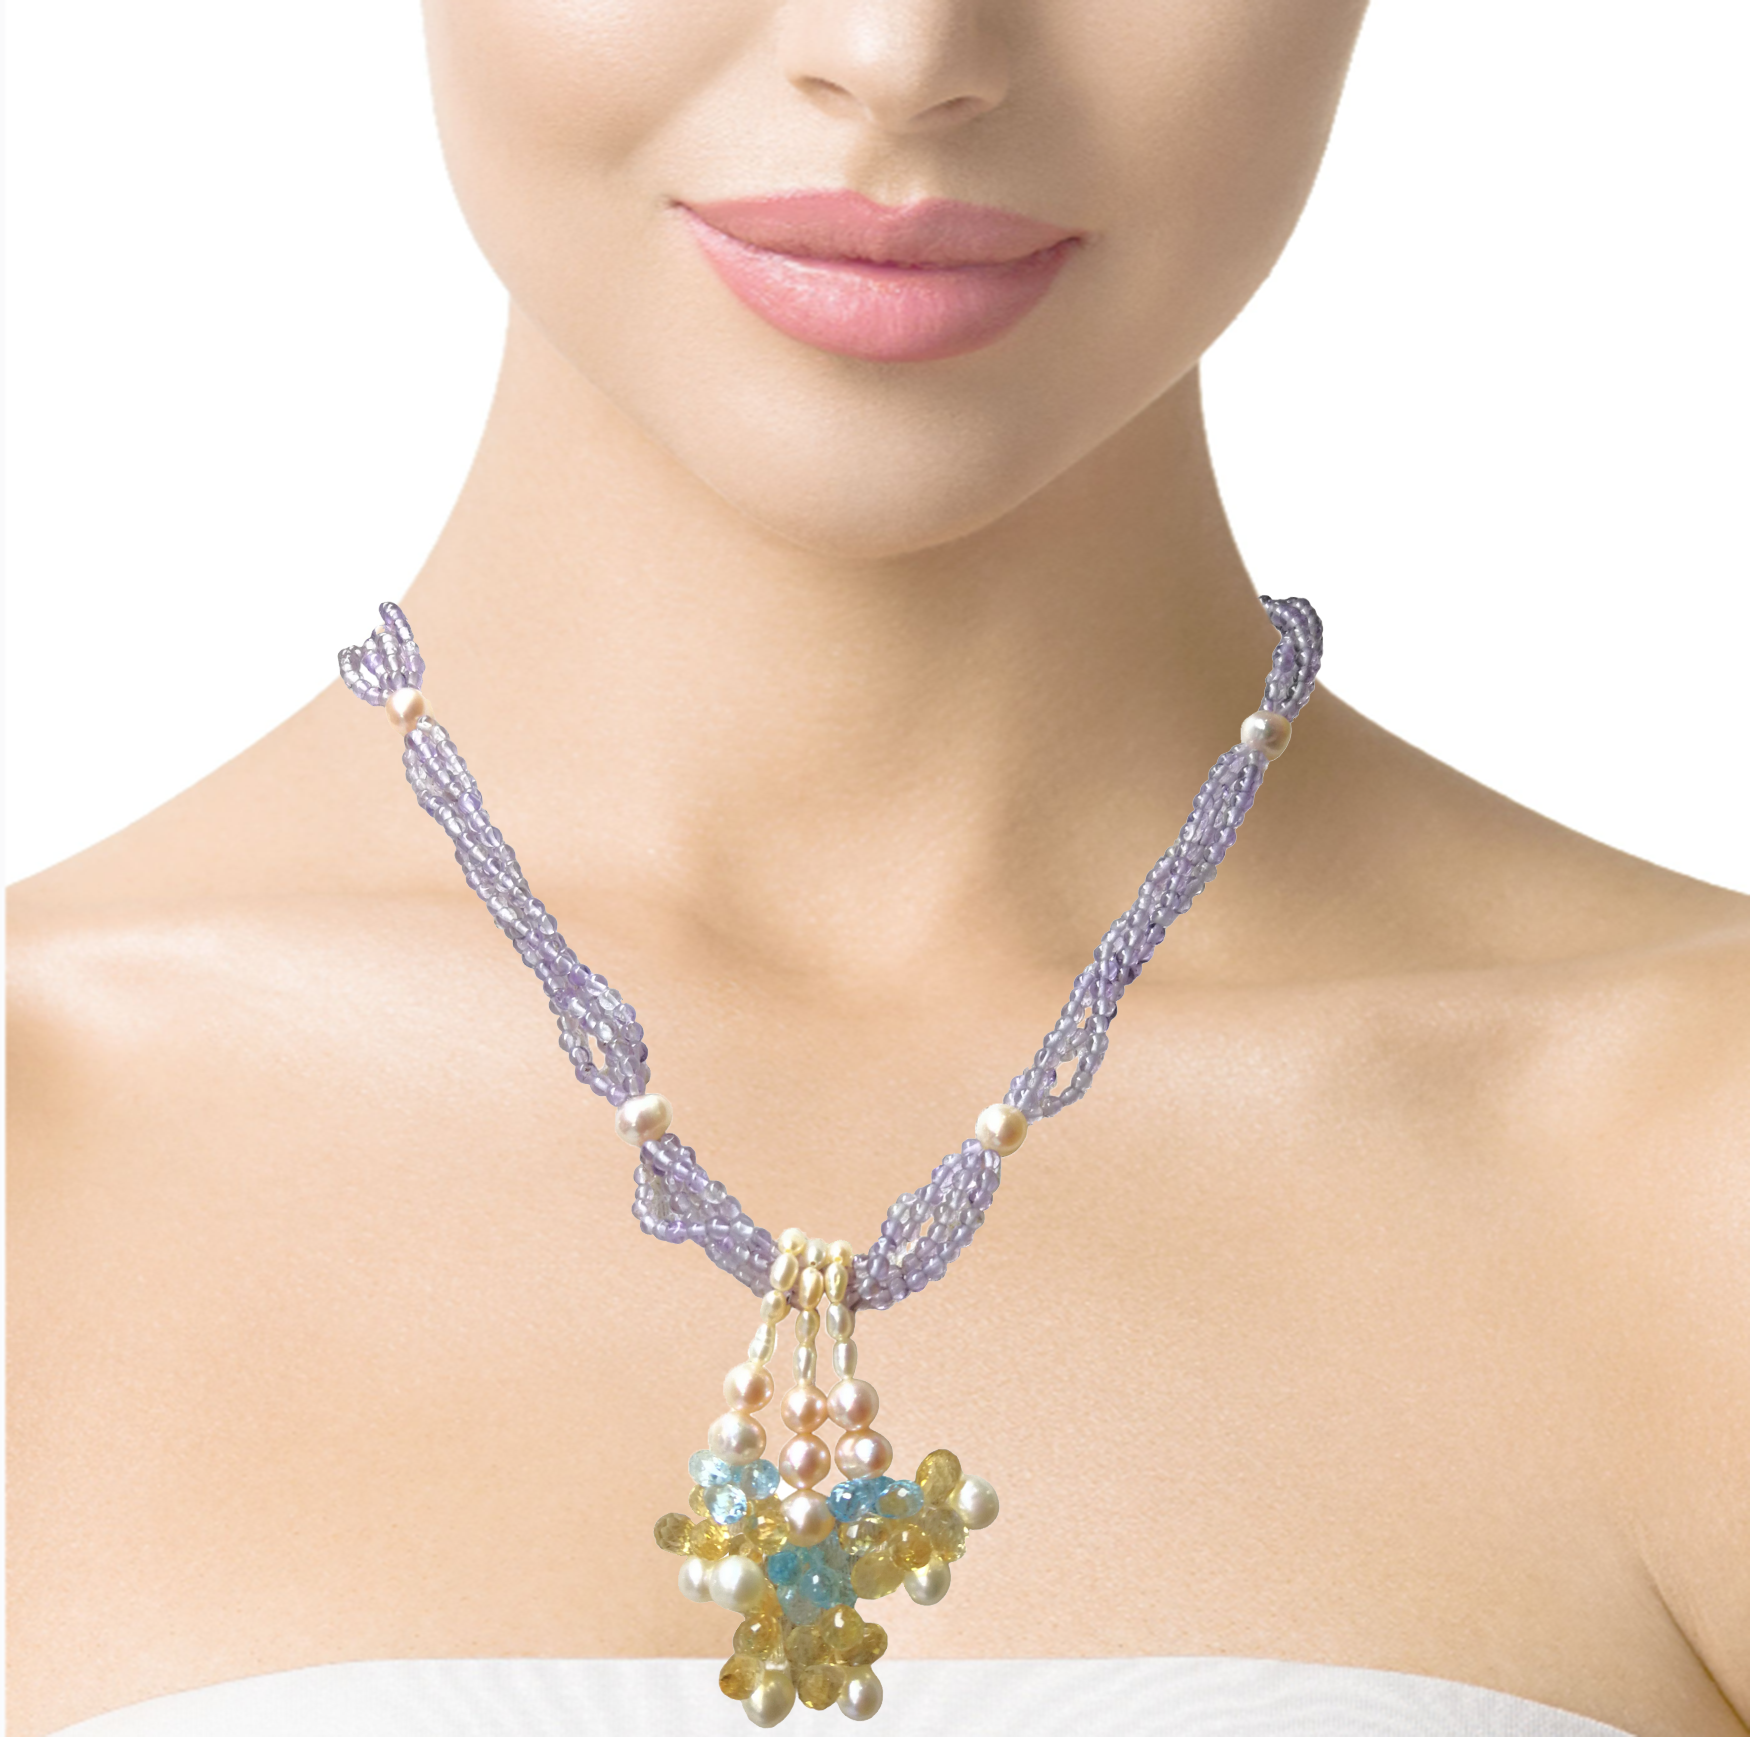 Natural Handmade Necklace 16"-18" Blue Topaz, Citrine, Pearls Amethyst Gemstone Beads Jewelry